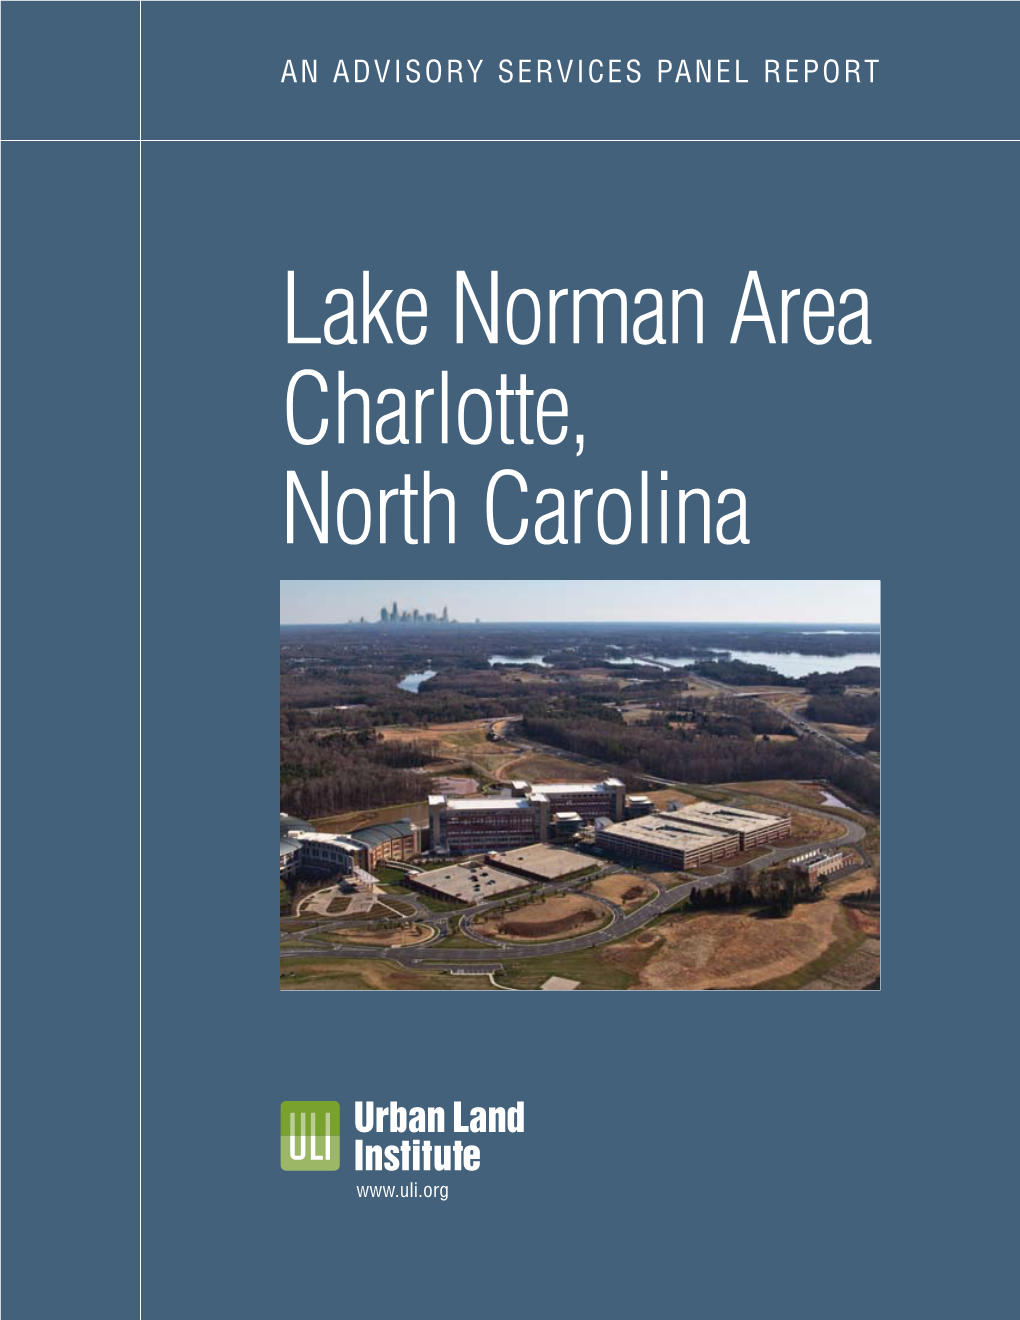 Lake Norman Area Charlotte, North Carolina